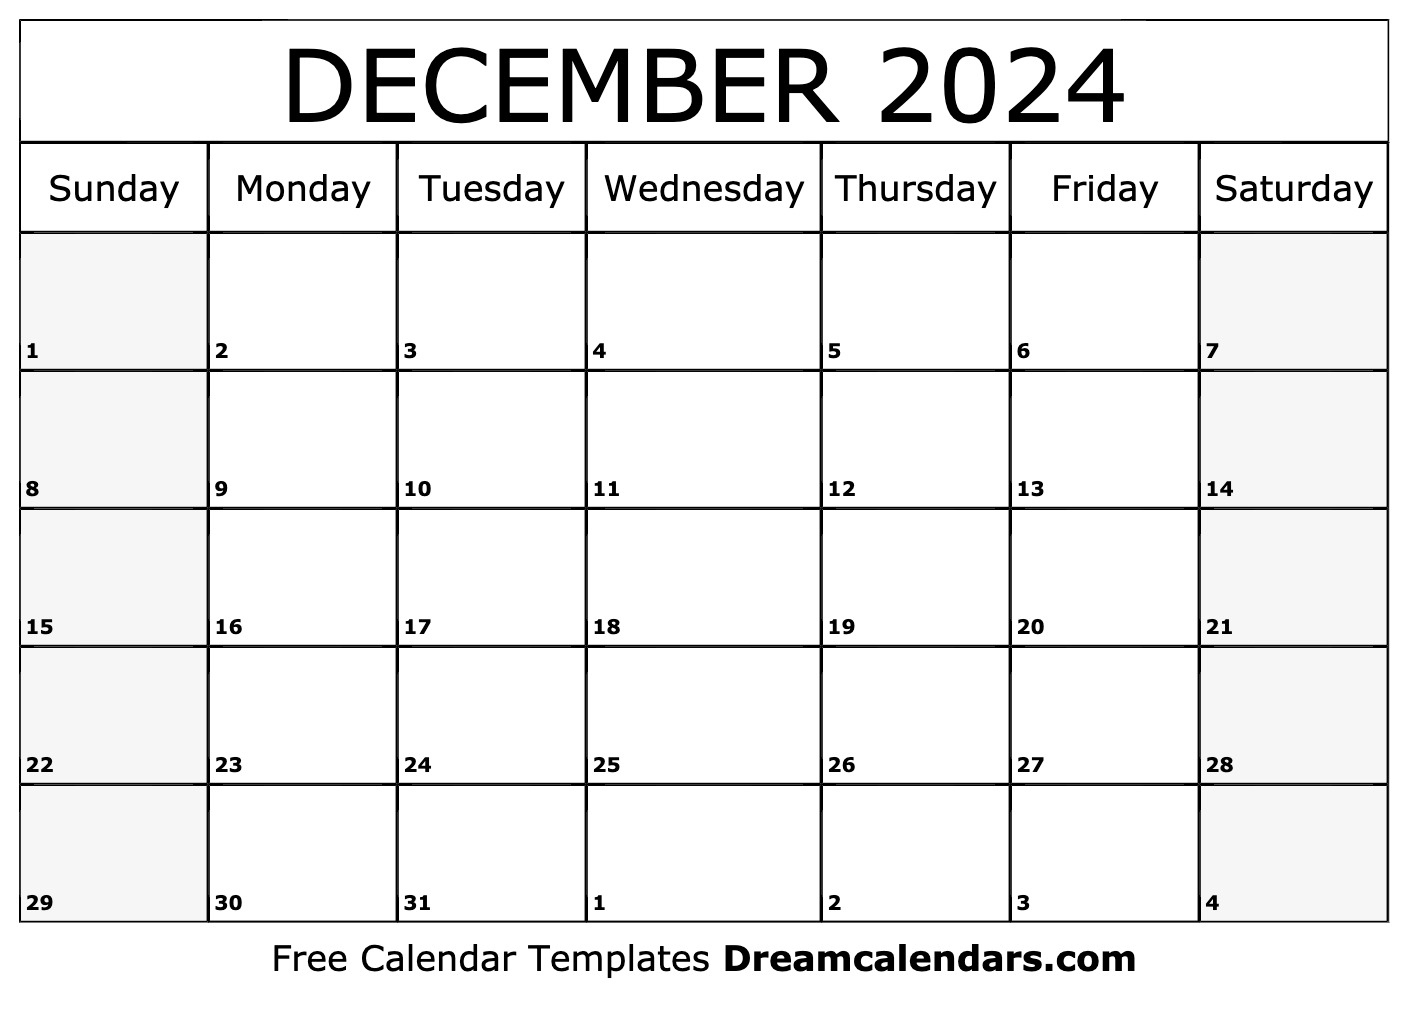 Dec 2024 Calendar Printable Free Printable Calendar 2024